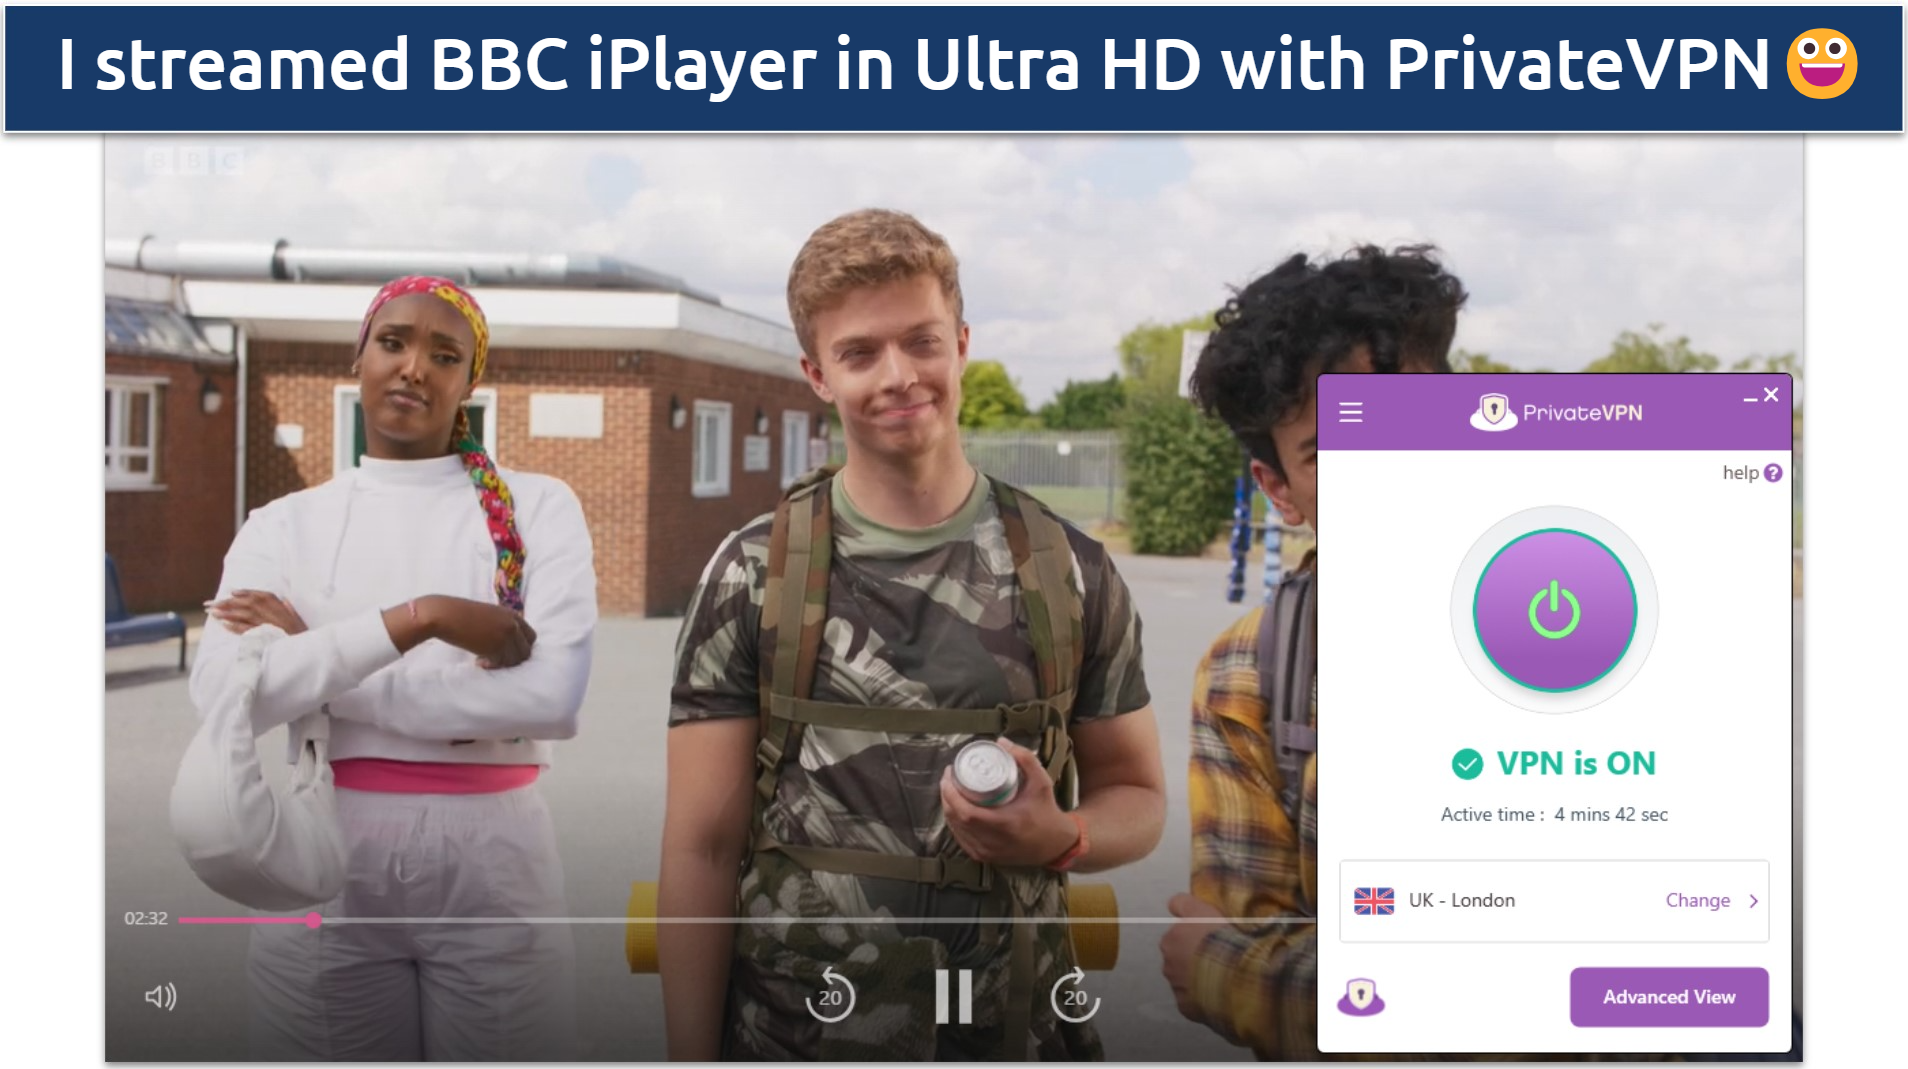 Screenshot of PrivateVPN streaming BBC iPlayer with UK London server